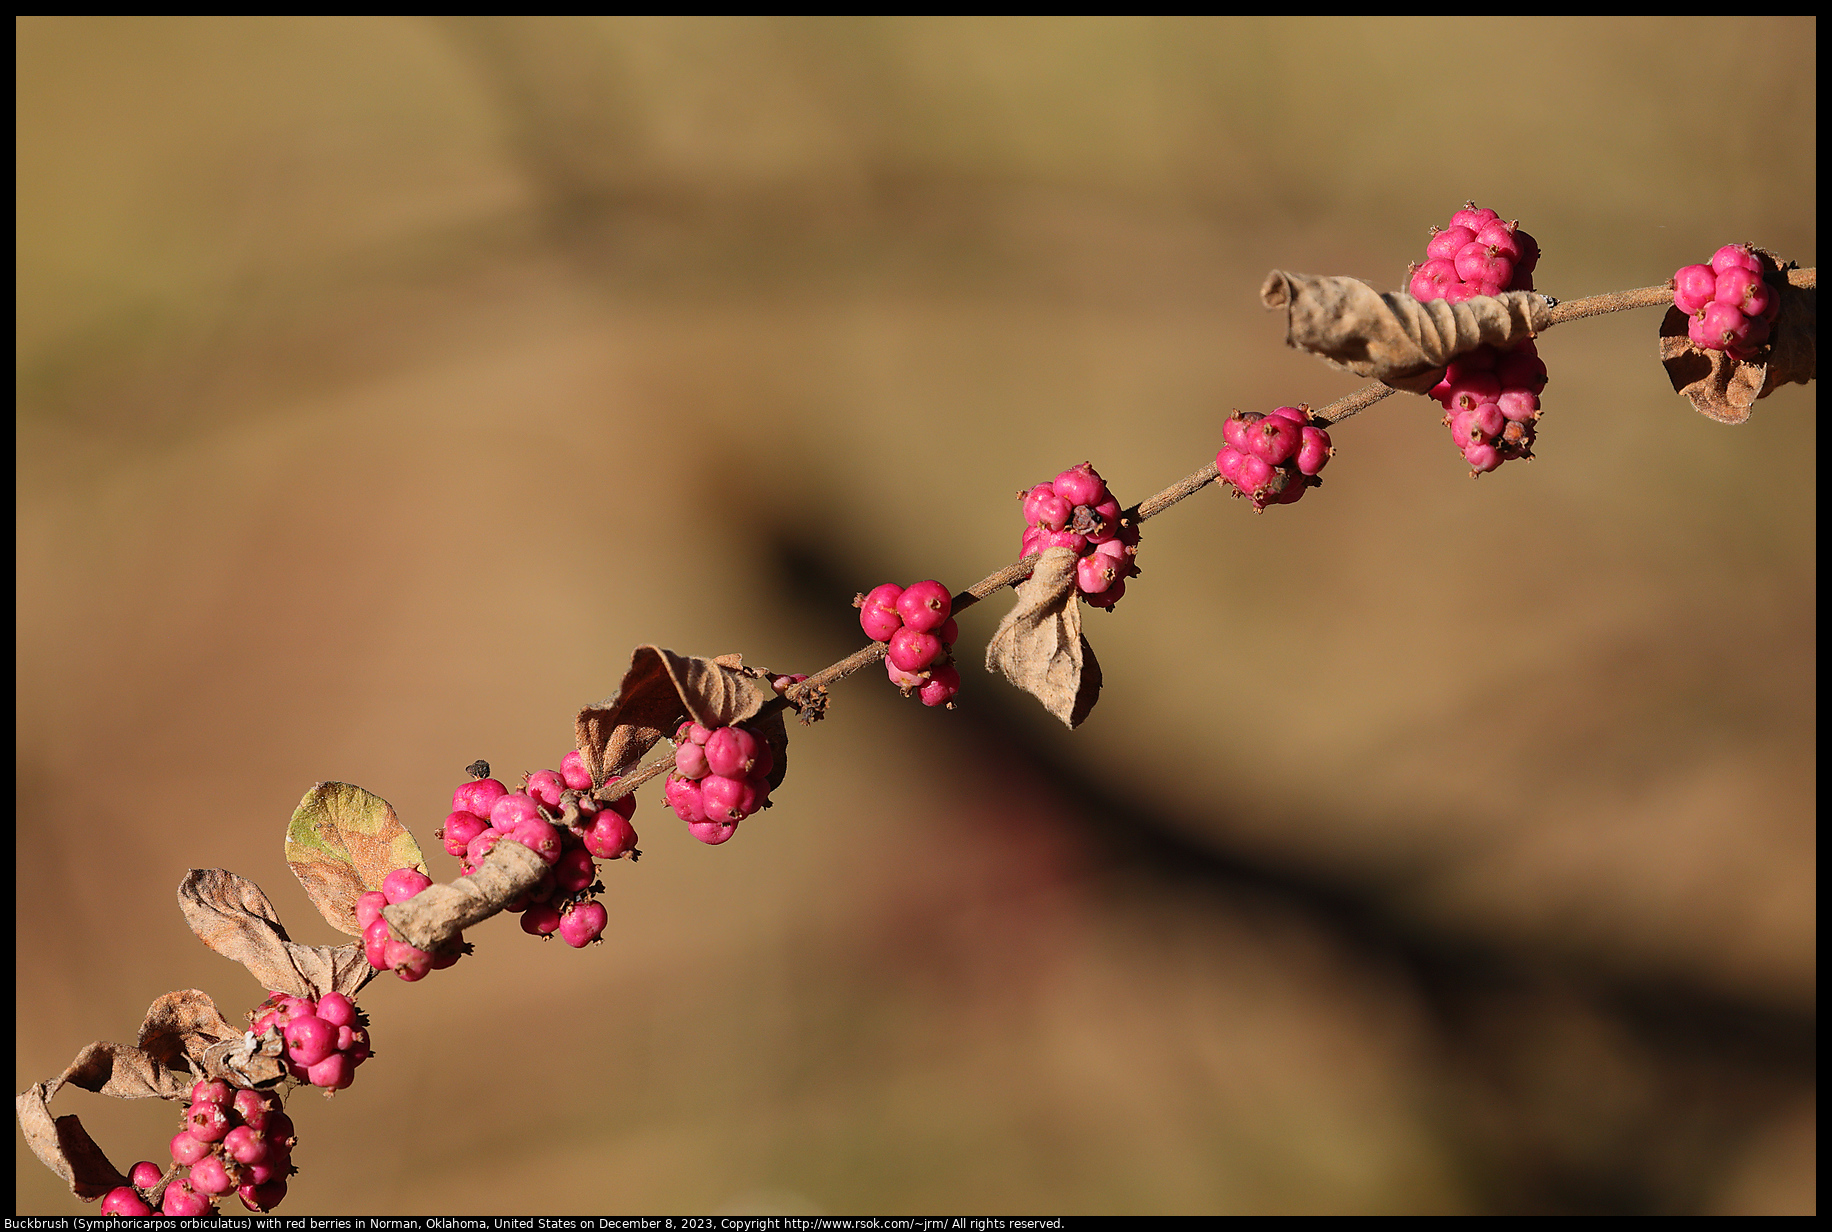 Buckbrush (Symphoricarpos orbiculatus) with red berries in Norman, Oklahoma, United States on December 8, 2023